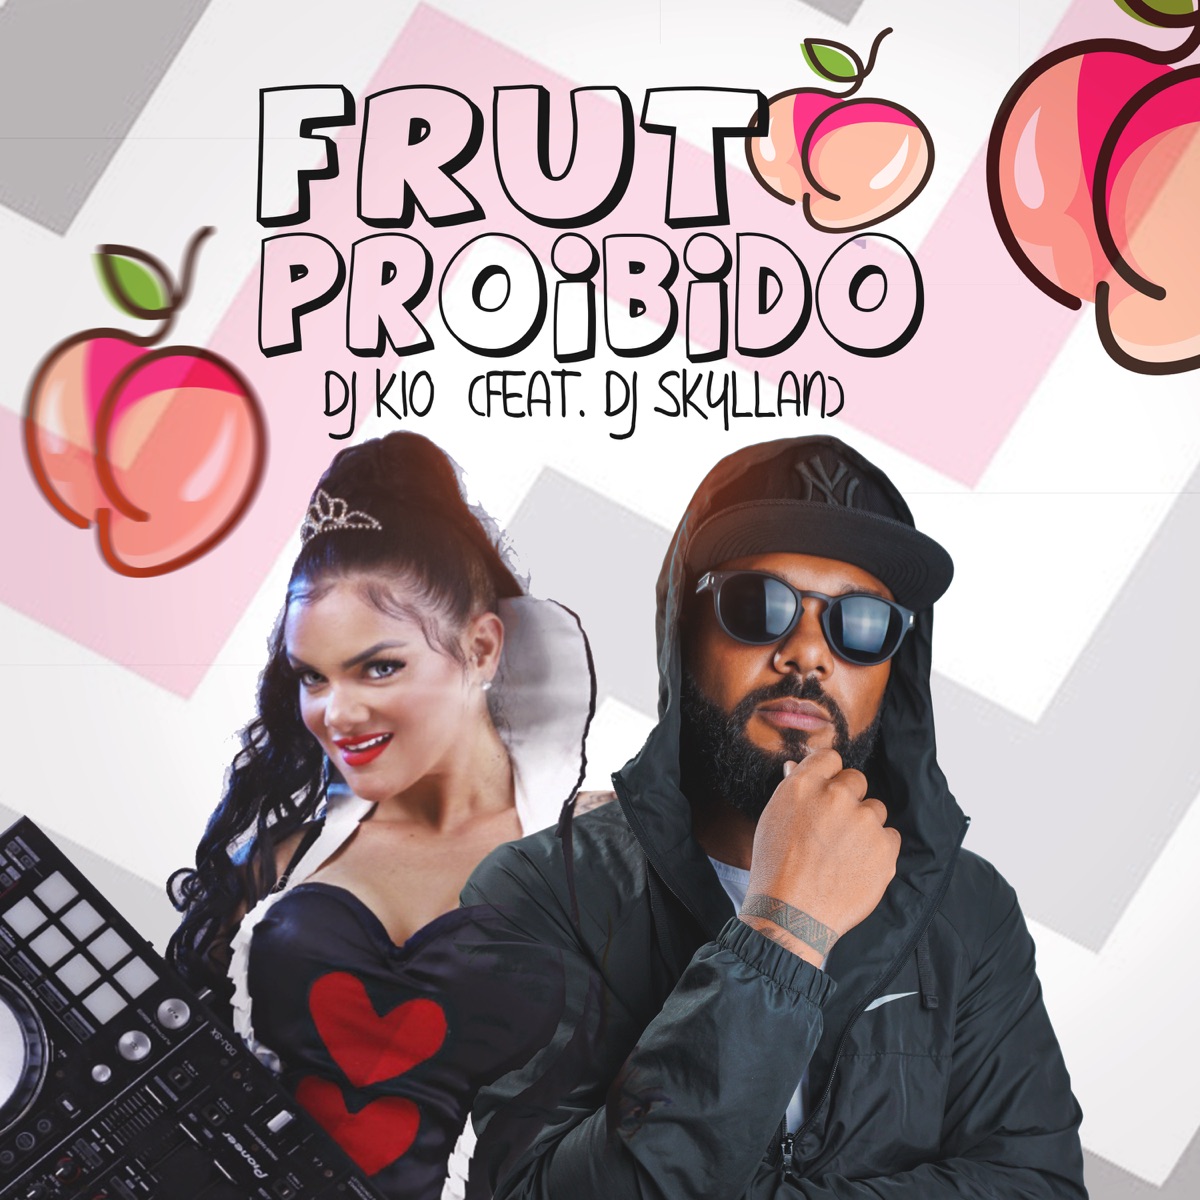 Bafora O Lança - Single - Album by DJ Kio - Apple Music